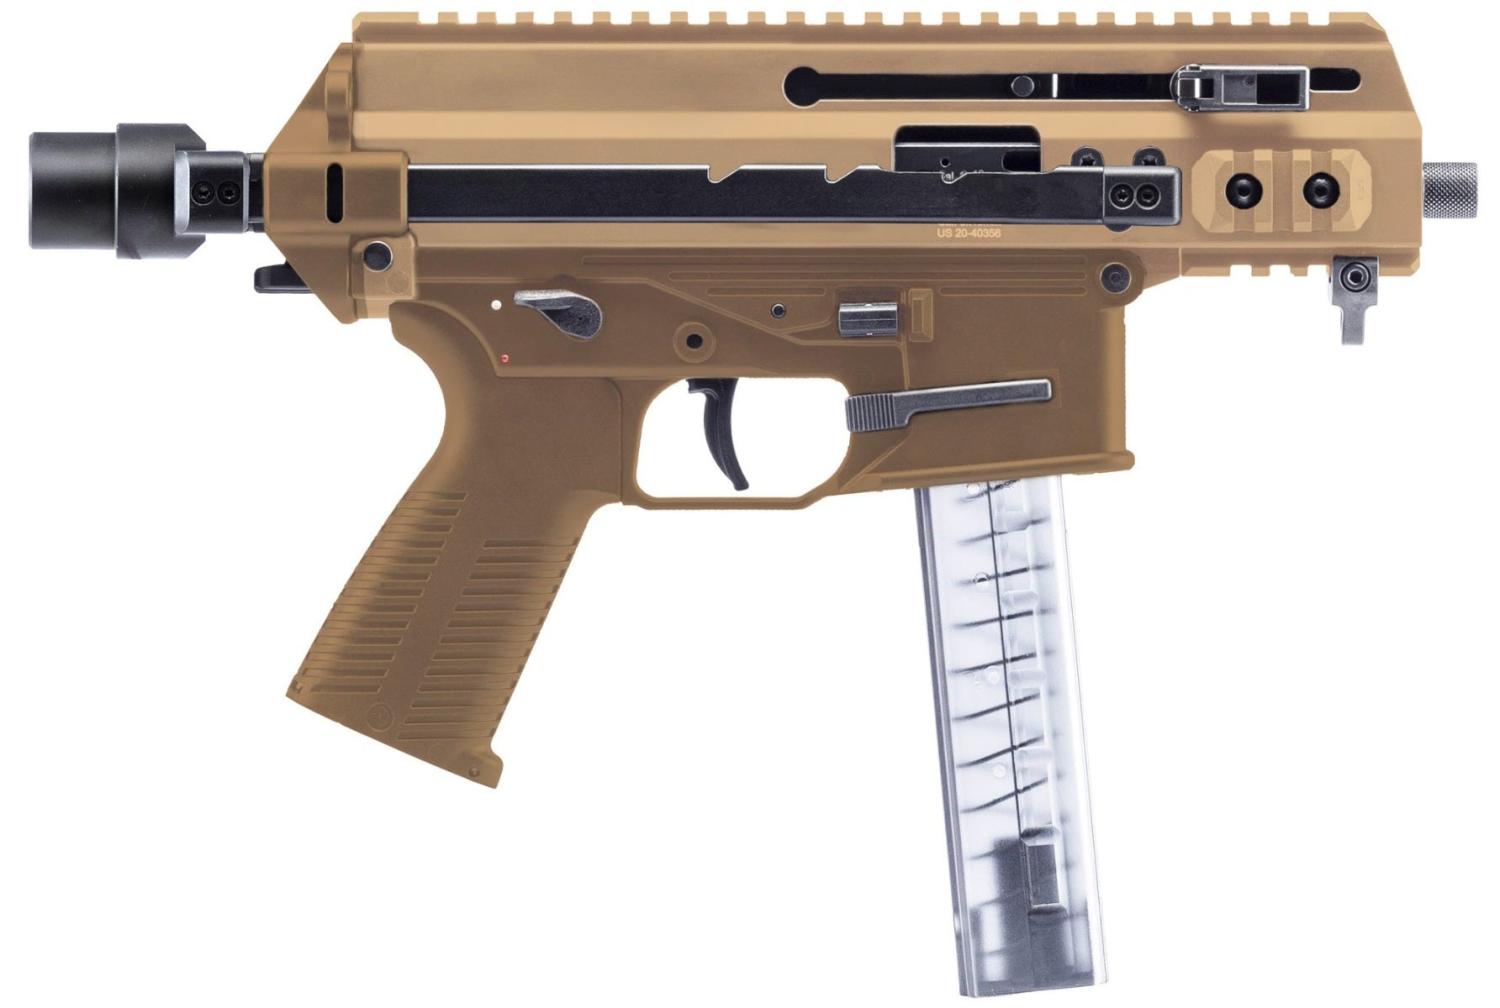 B&T APC9K Pro Coyote Tan 9mm 4.3" Barrel 30-Rounds Telescopic Brace Adapter - $2775.99 ($7.99 S/H on Firearms)